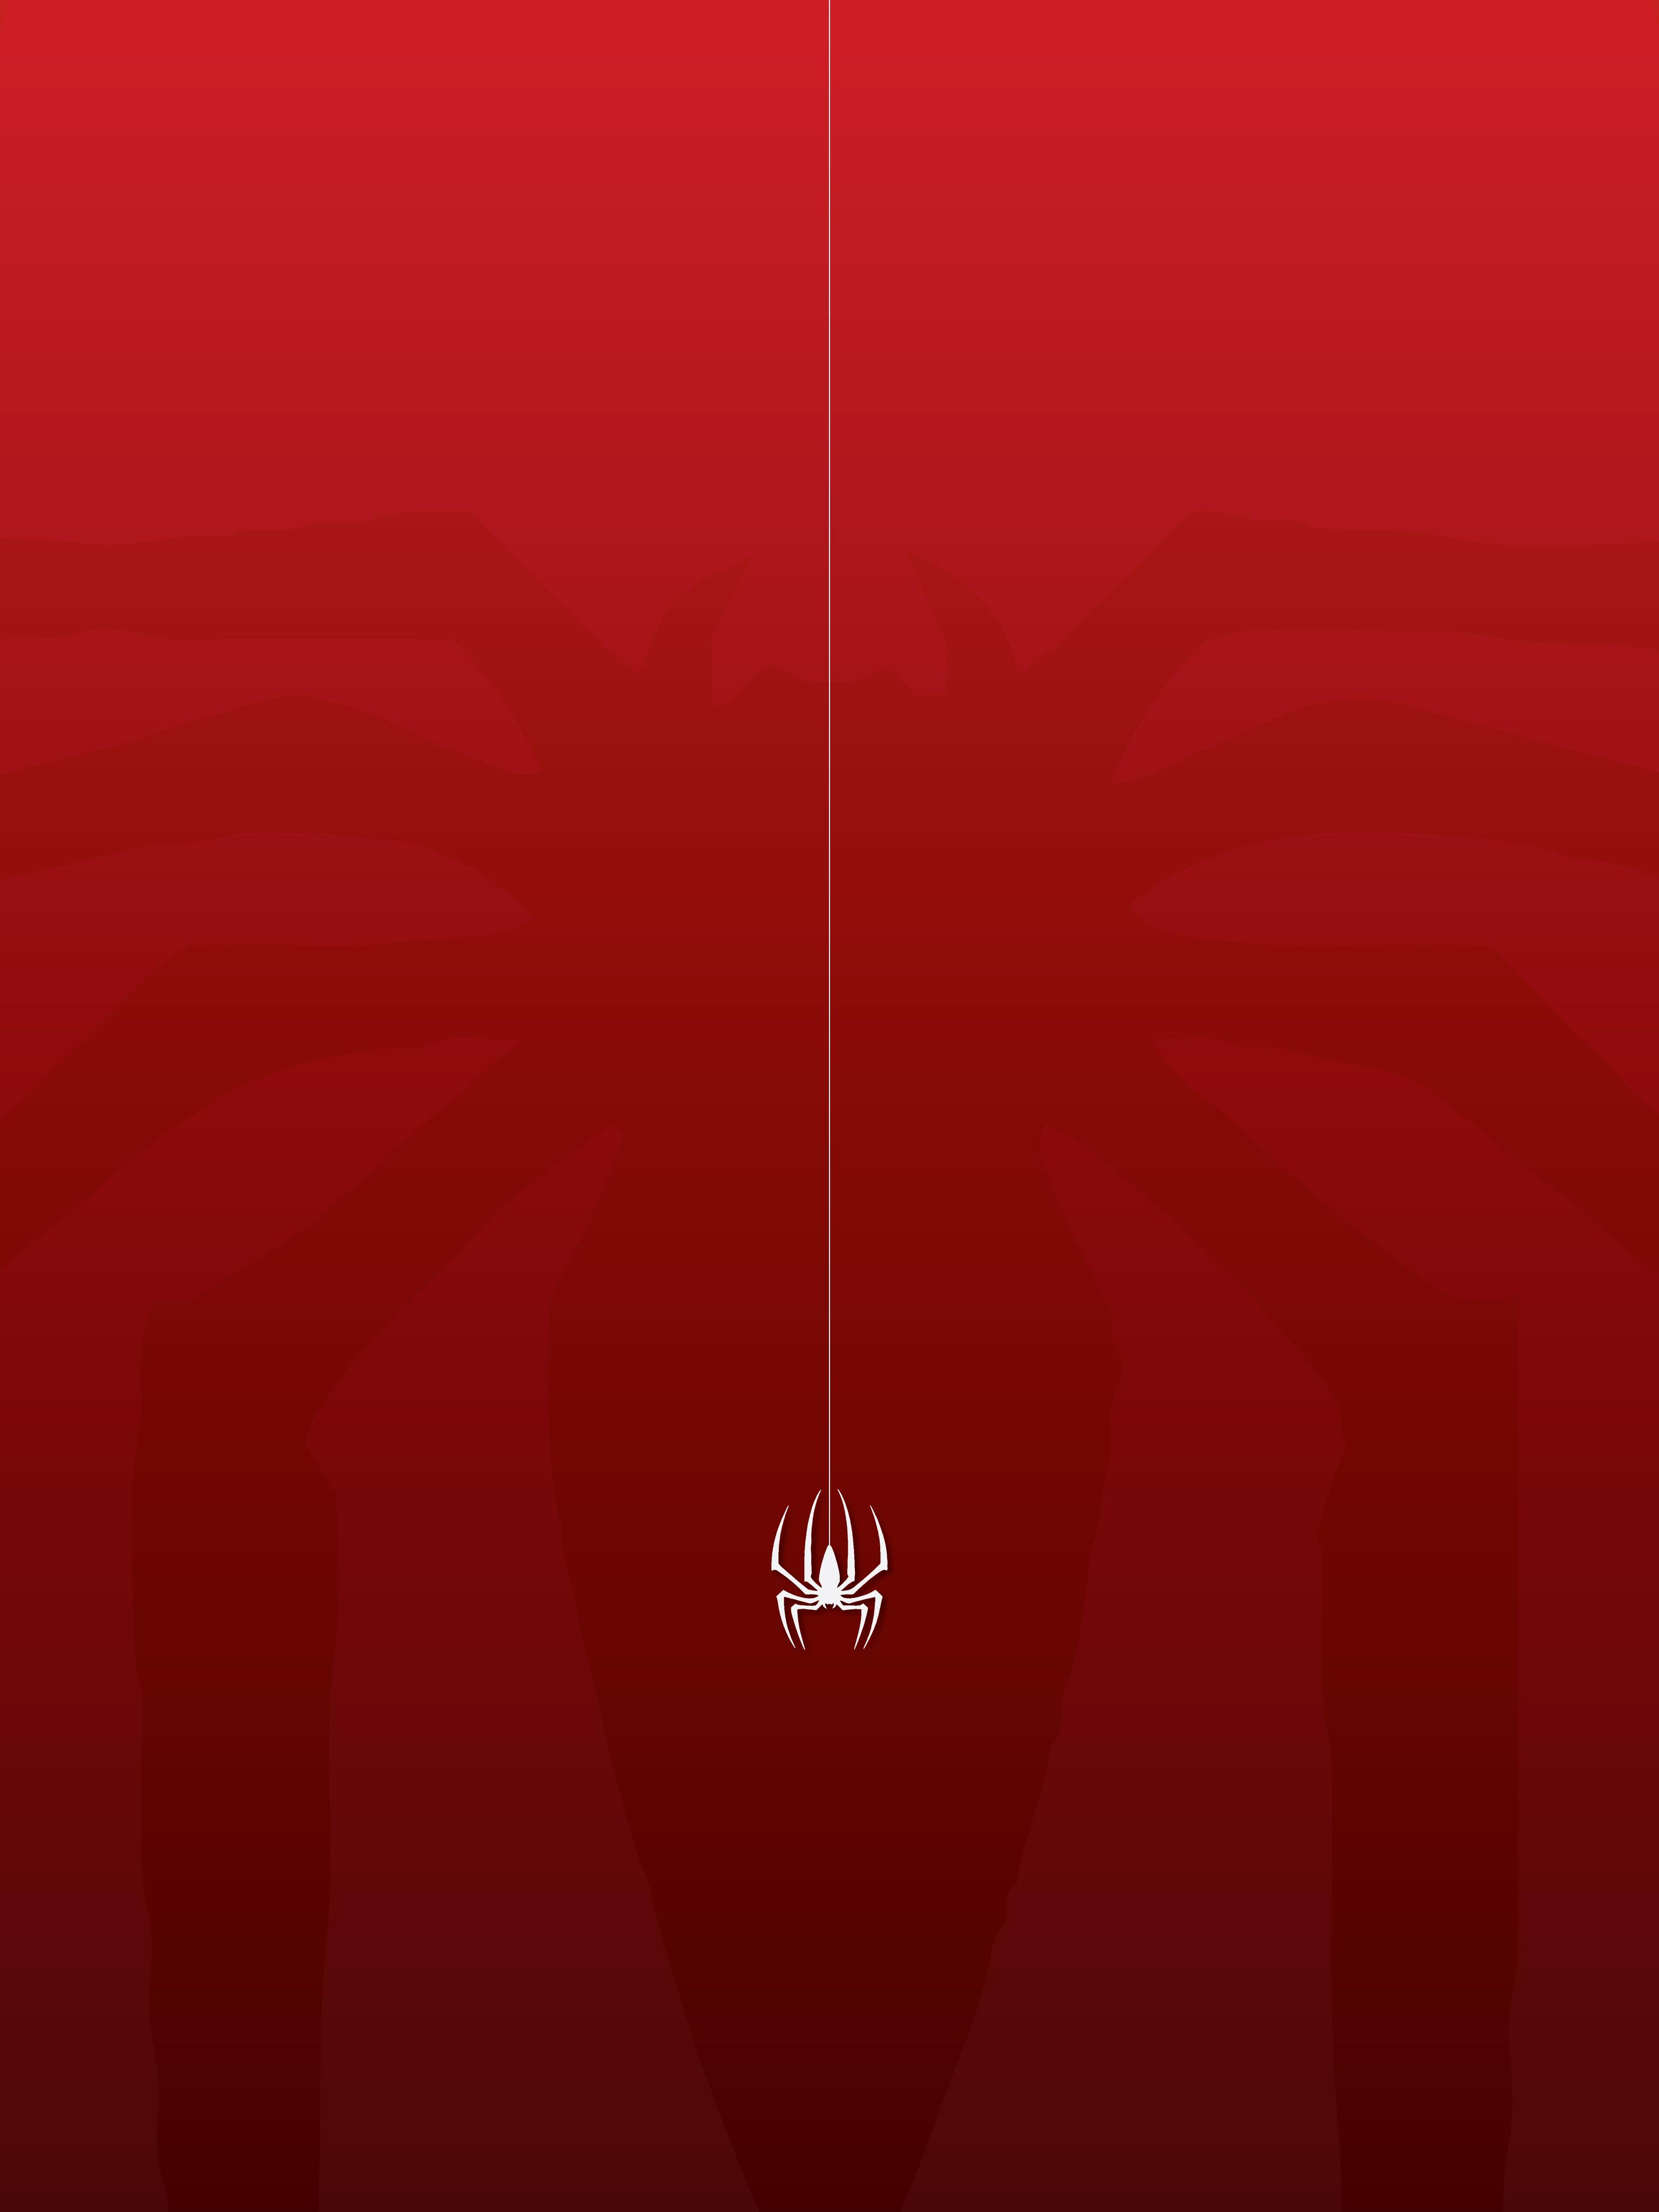 Spiderman Movie Mobile Wallpaper